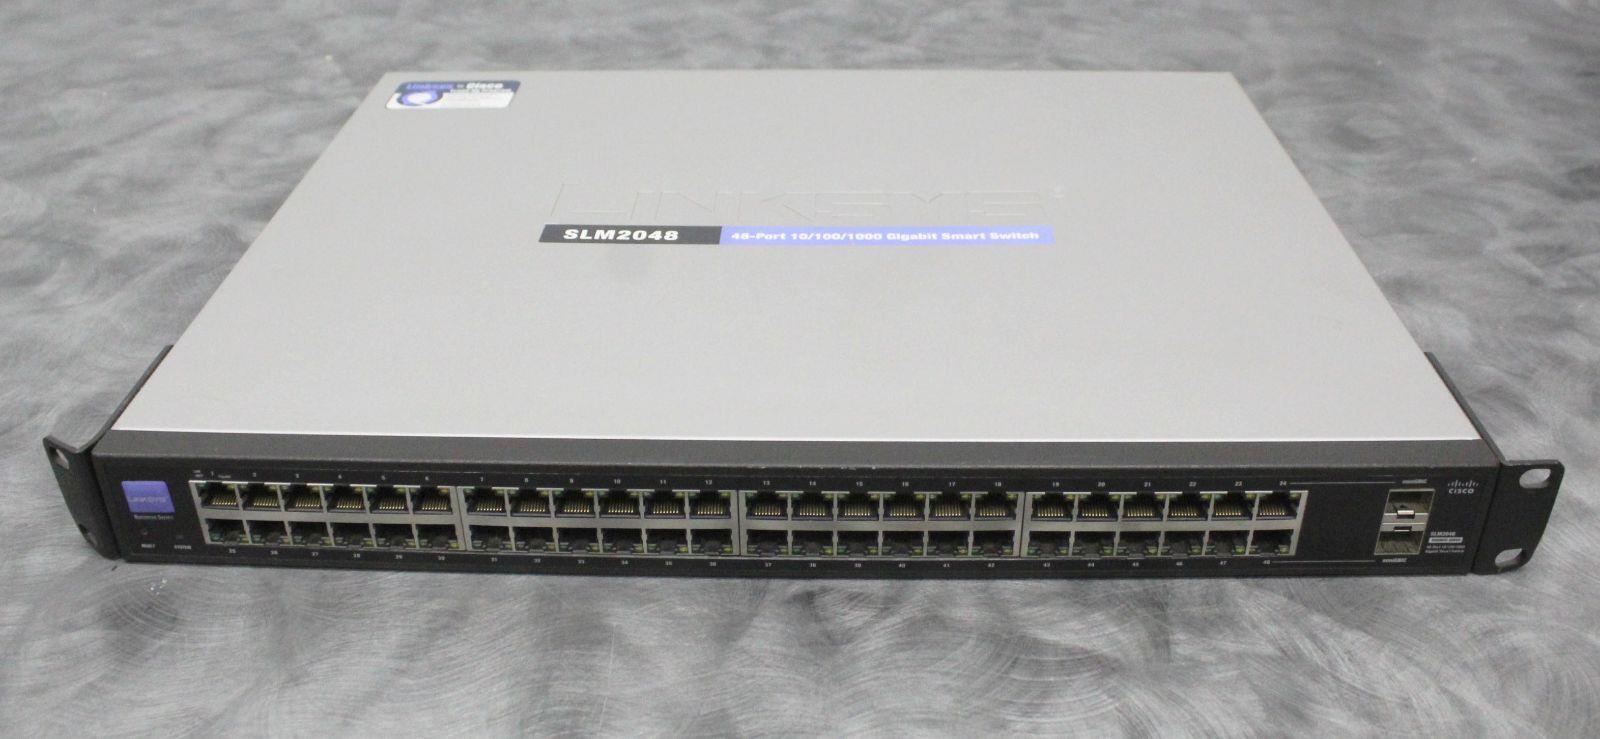 Cisco Linksys SLM2048 Business Series 48 Port 10/100/1000 Gigabit Smart Switch